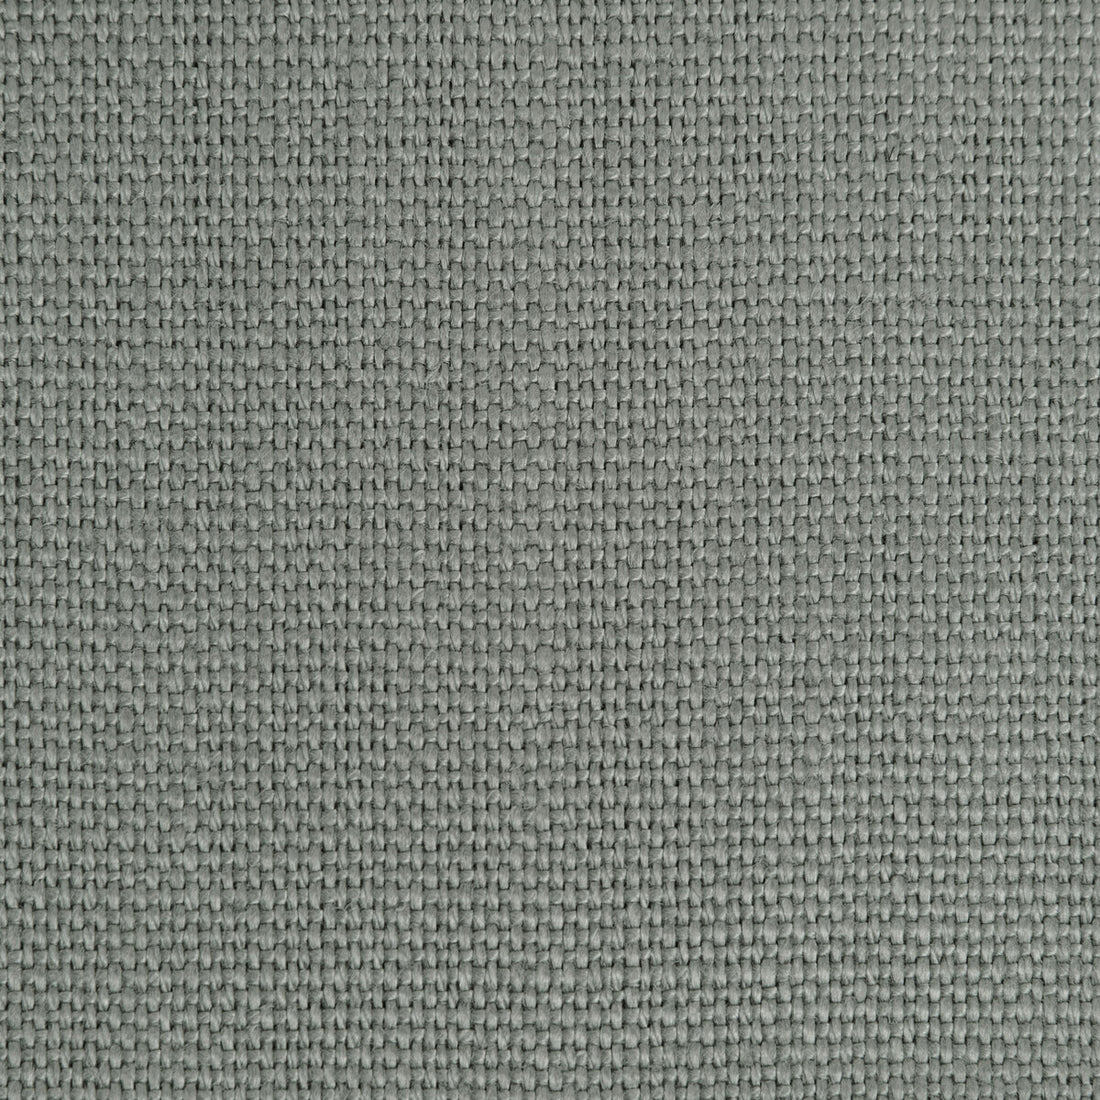 Stone Harbor fabric in steel color - pattern 27591.52.0 - by Kravet Basics